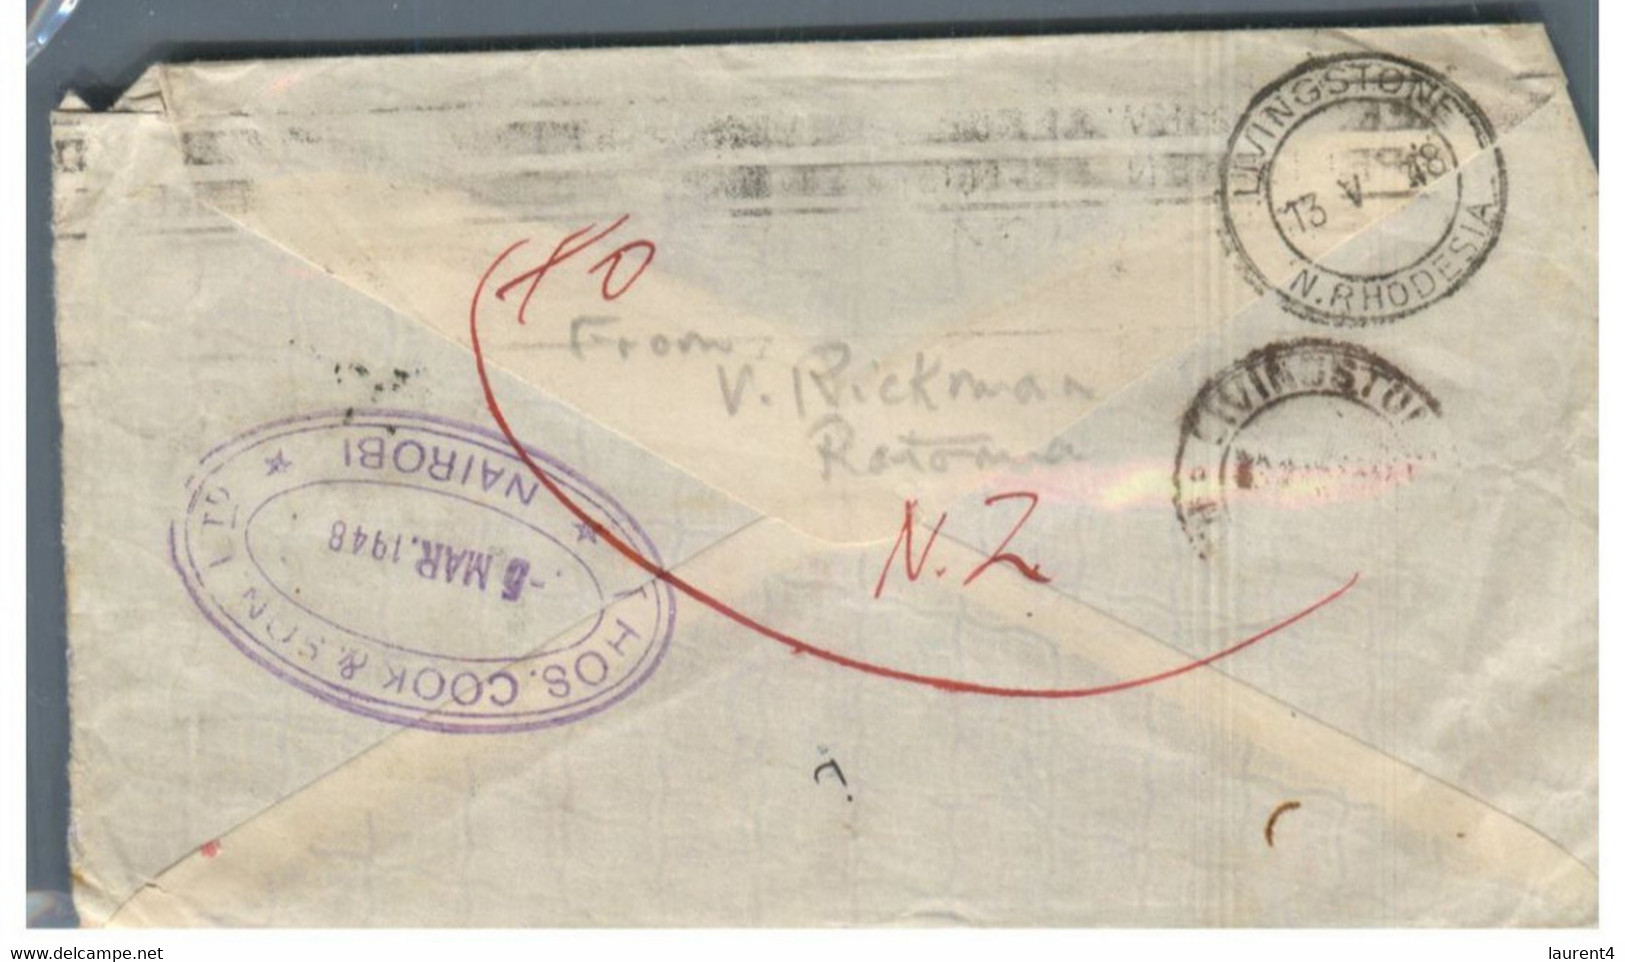 (VV 8) New Zealand Registered Cover Posted To Rhodesia (RTO) 1948 - With N. Rhodesia + Uganda + Kenya Postmarks - Federation Of Malaya